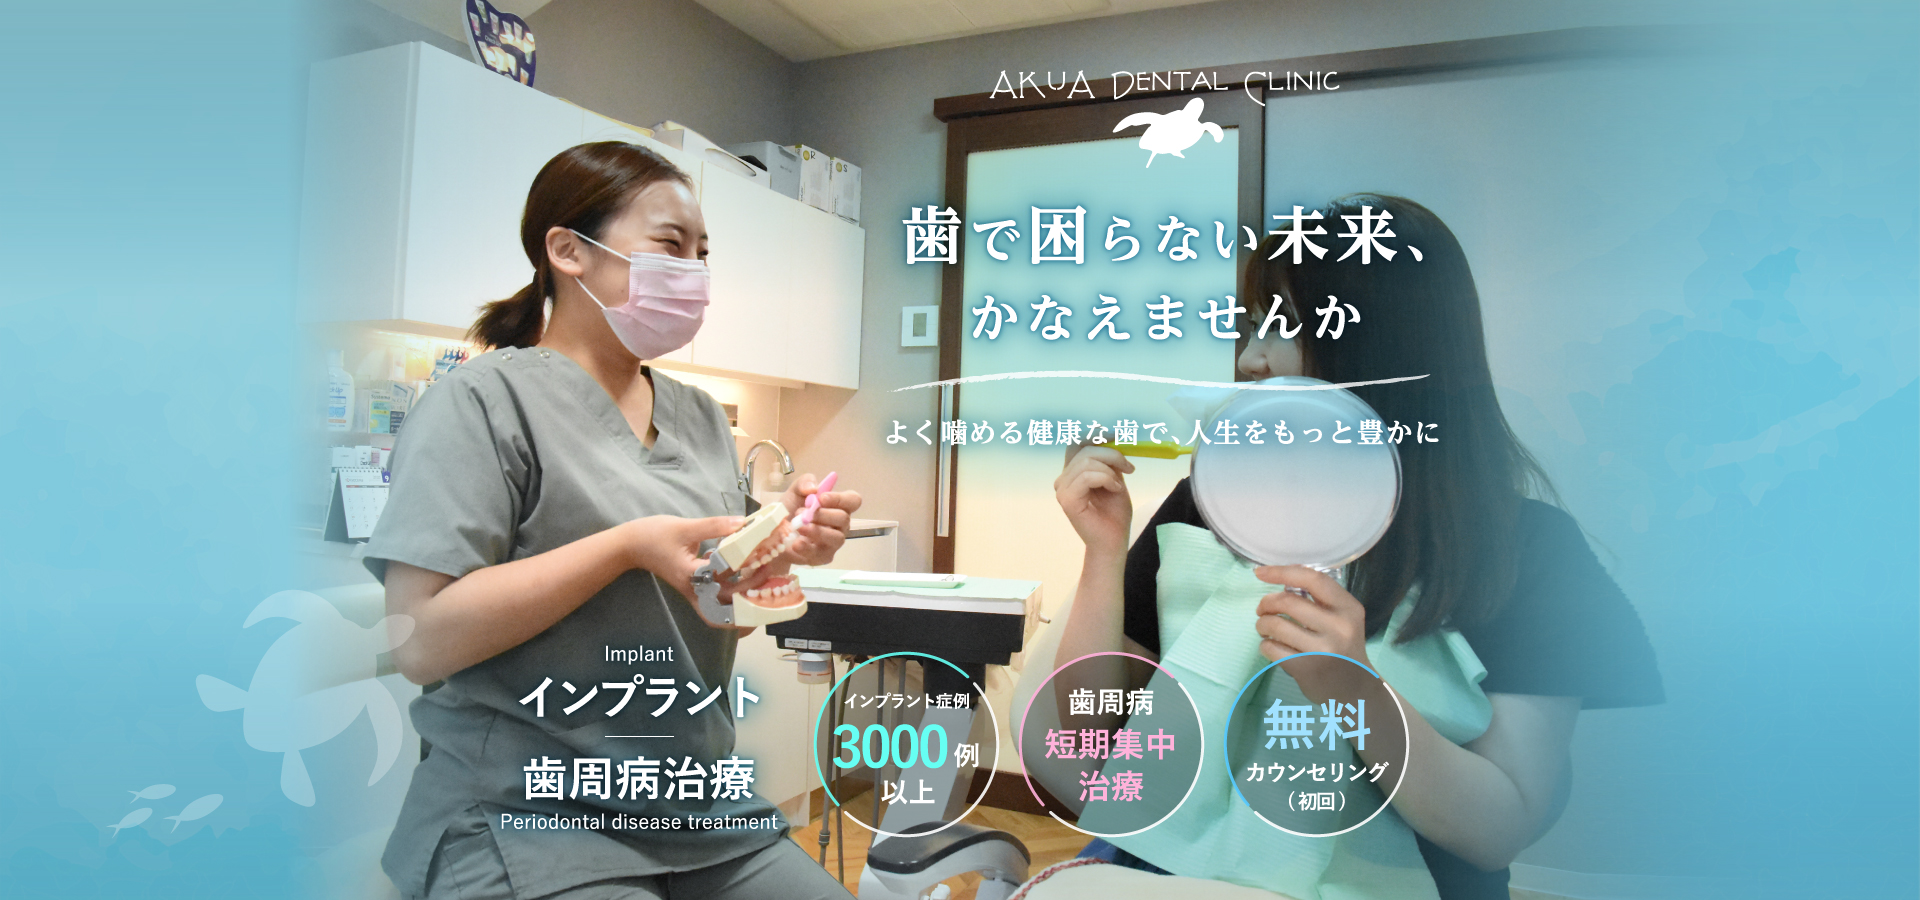 新橋駅・AKuA Dental Clinic